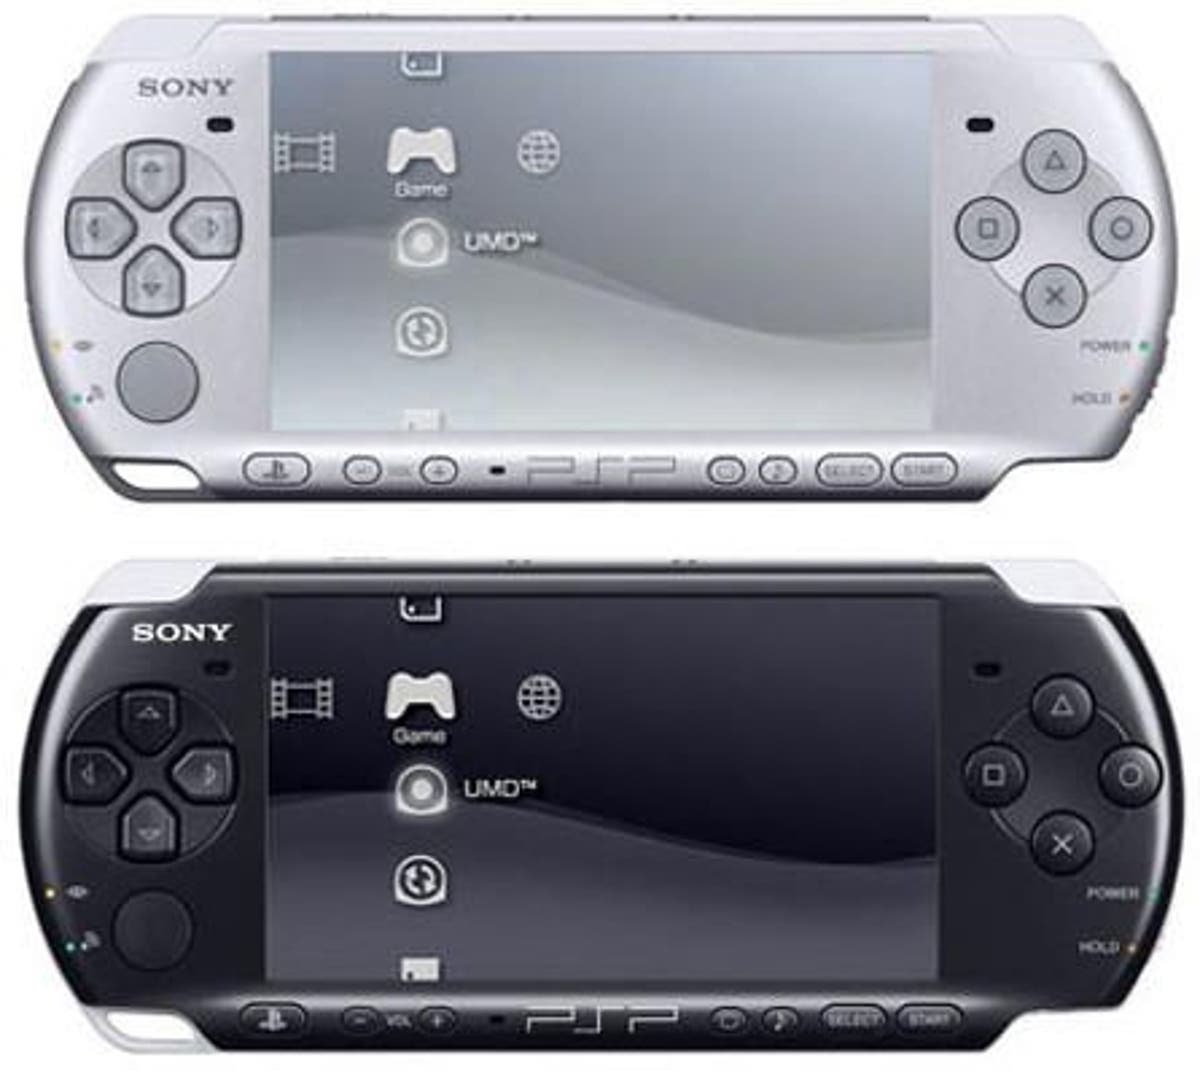 Sony PSP-3000 baja hoy de precio a 130 euros – MuyComputer